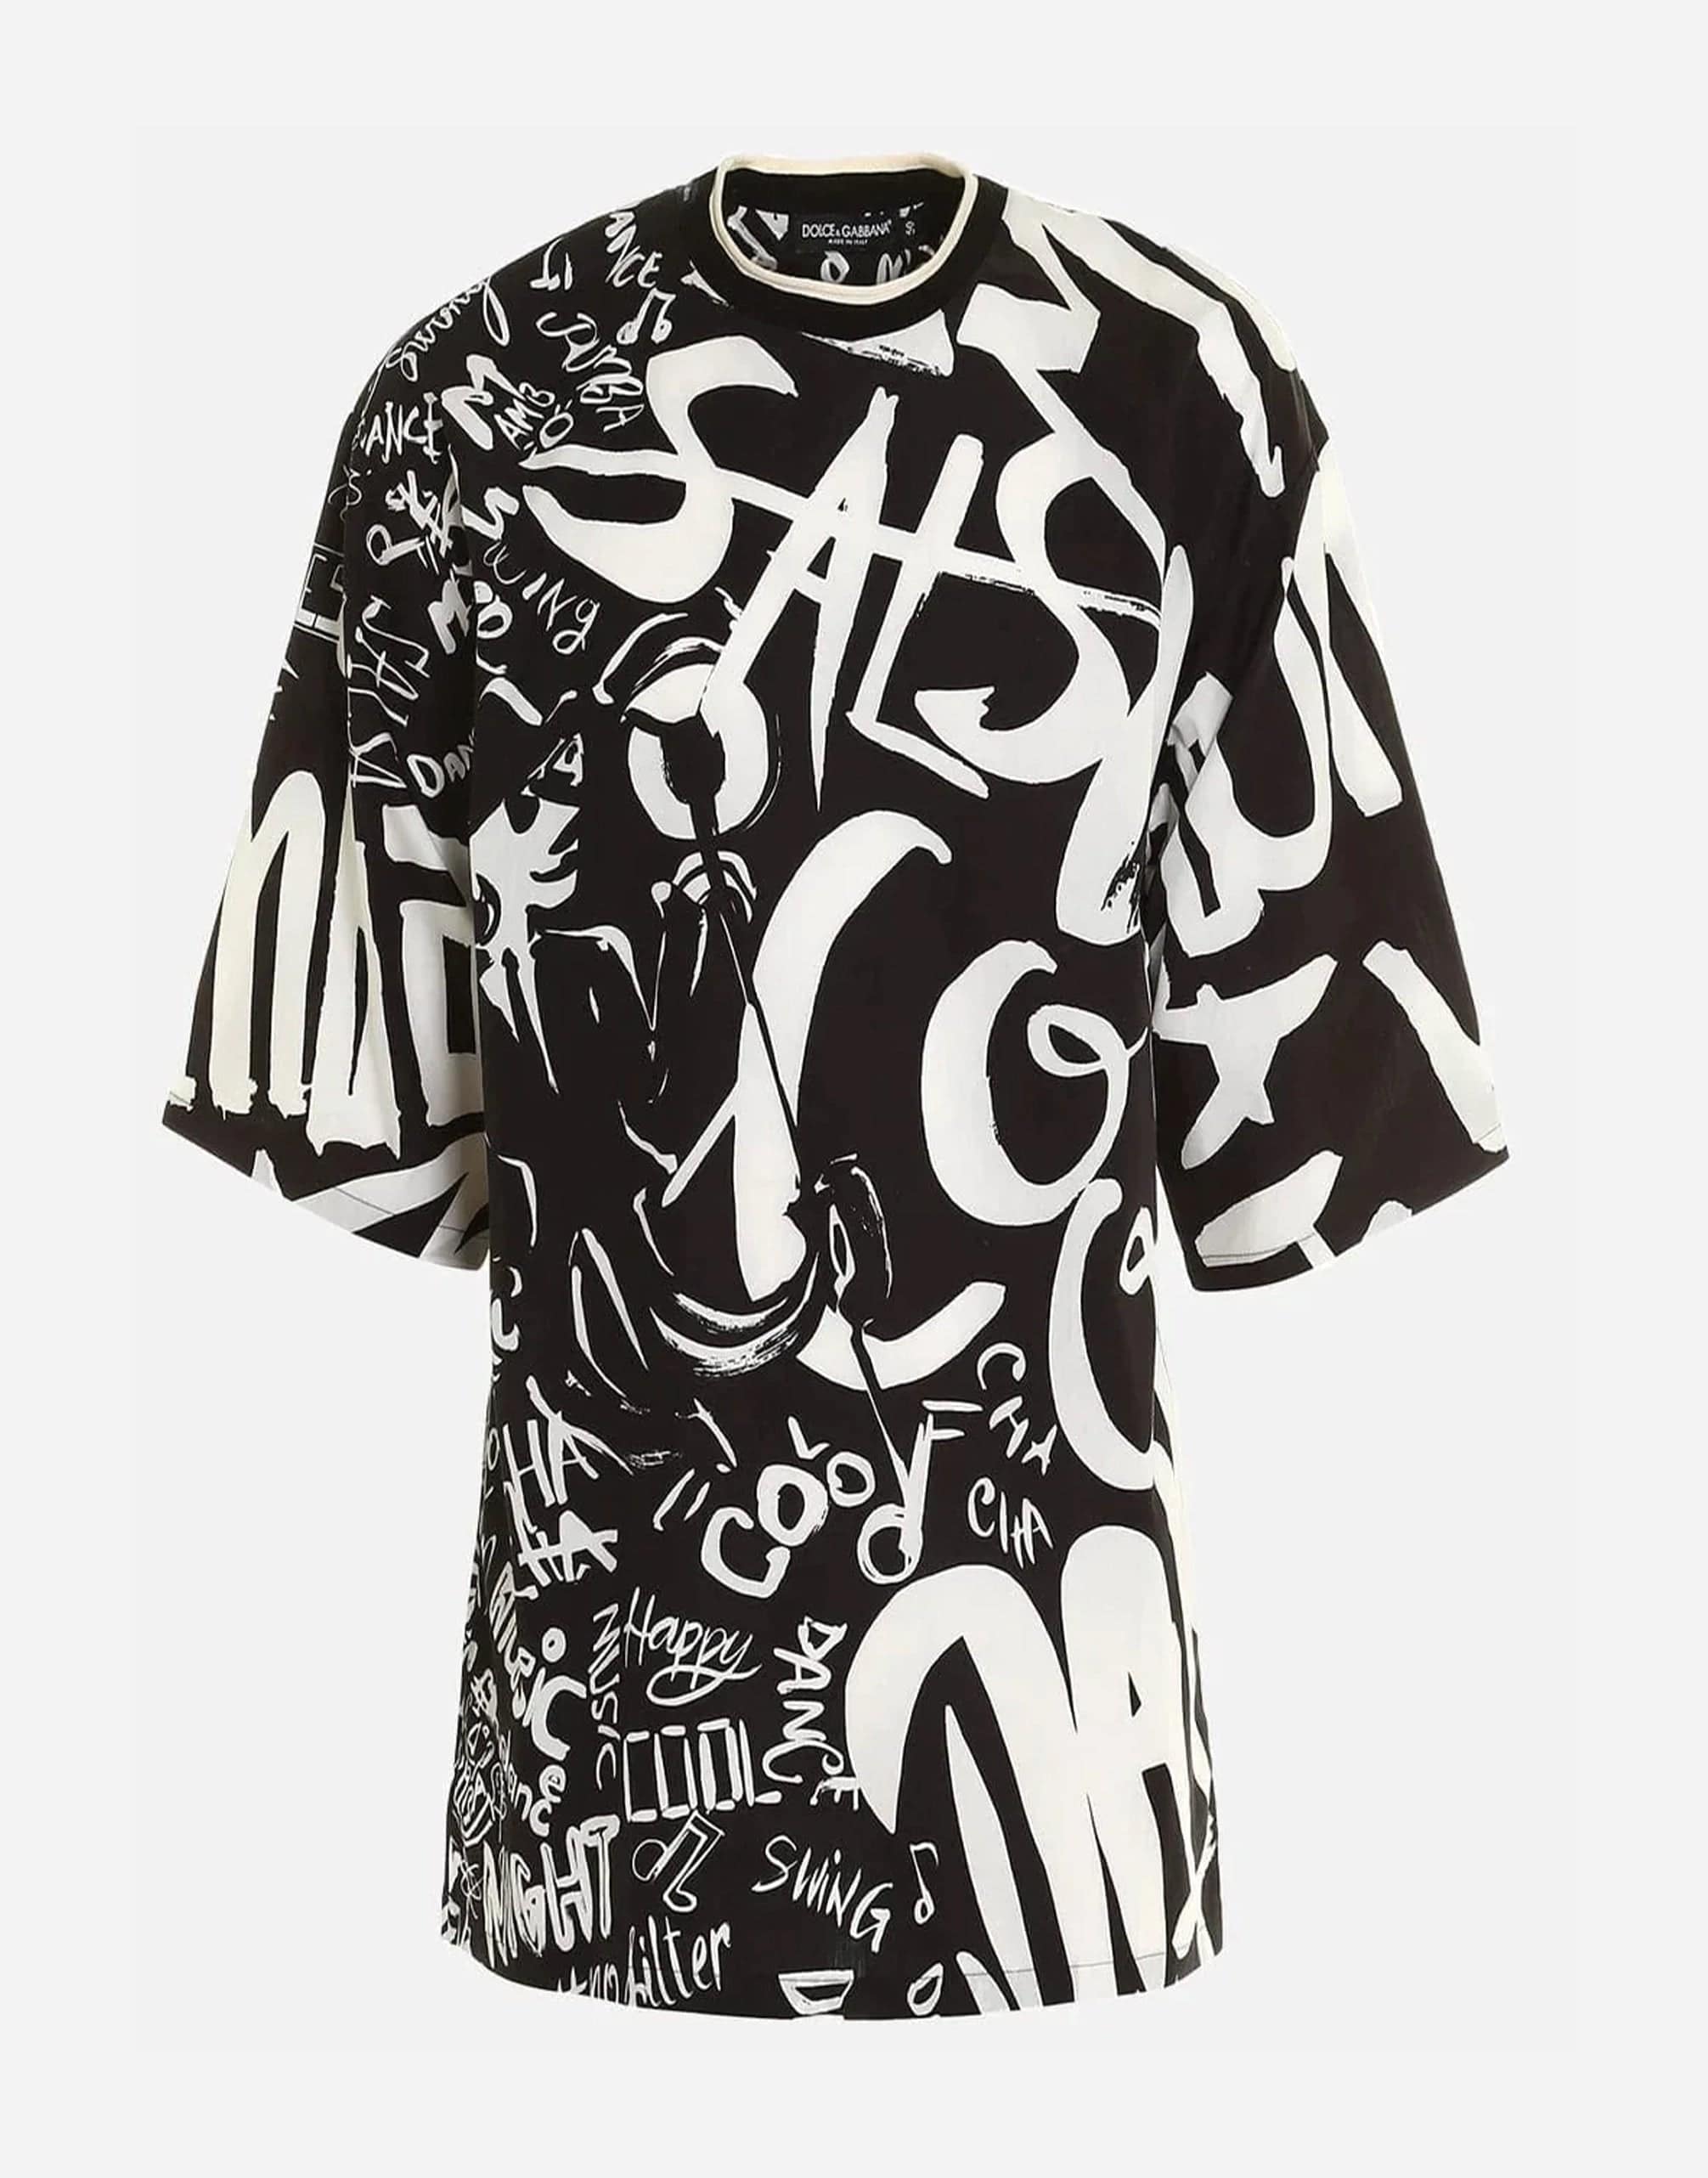 Dolce & Gabbana Mural-Print T-Shirt